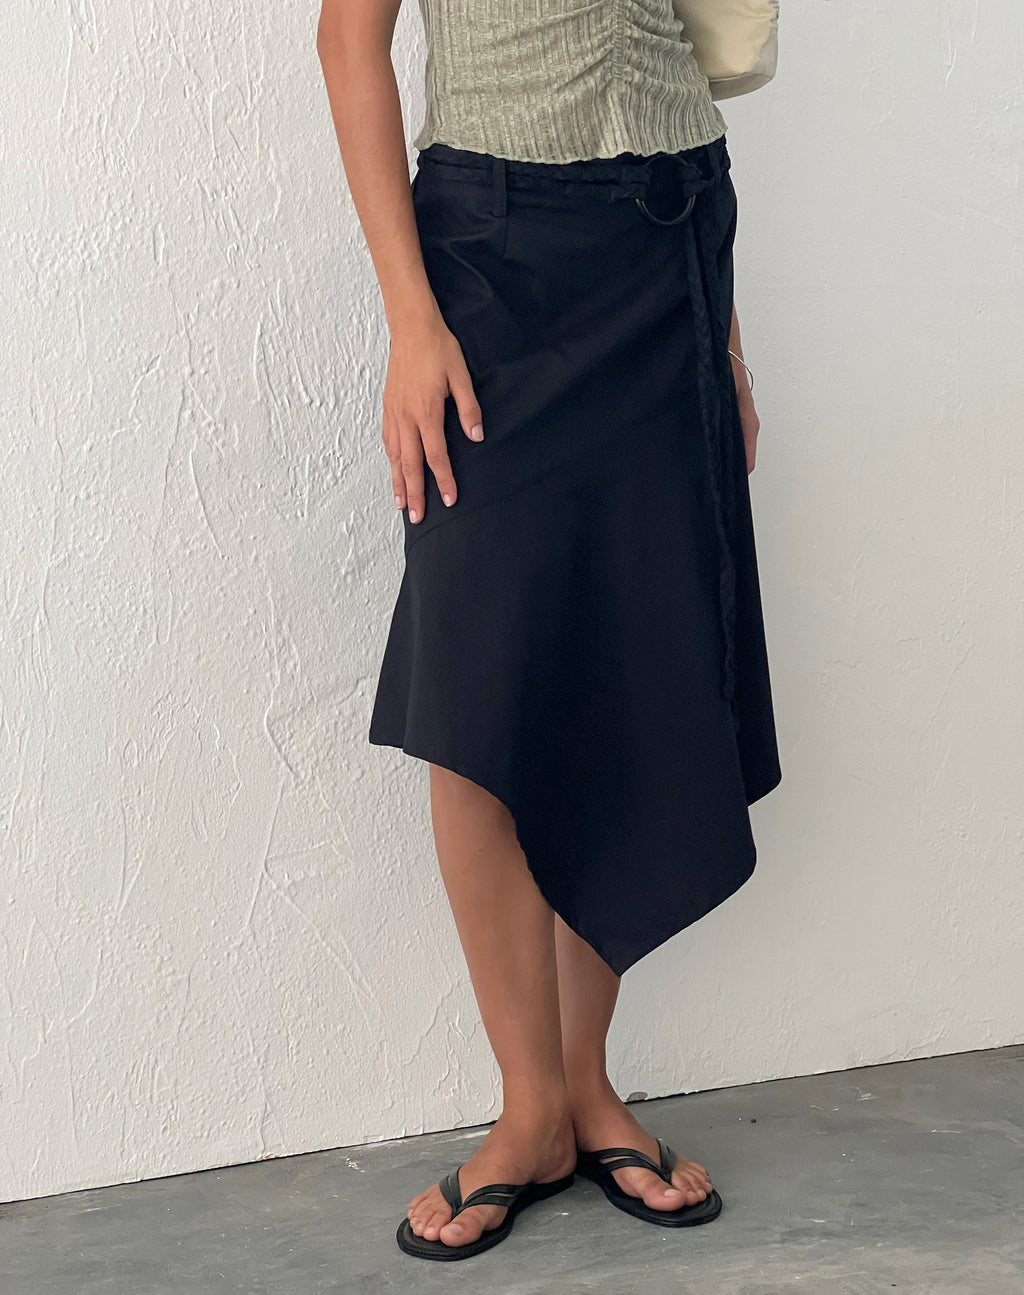 Nejusi Asymmetric Midi Skirt in Black with Braided Belt